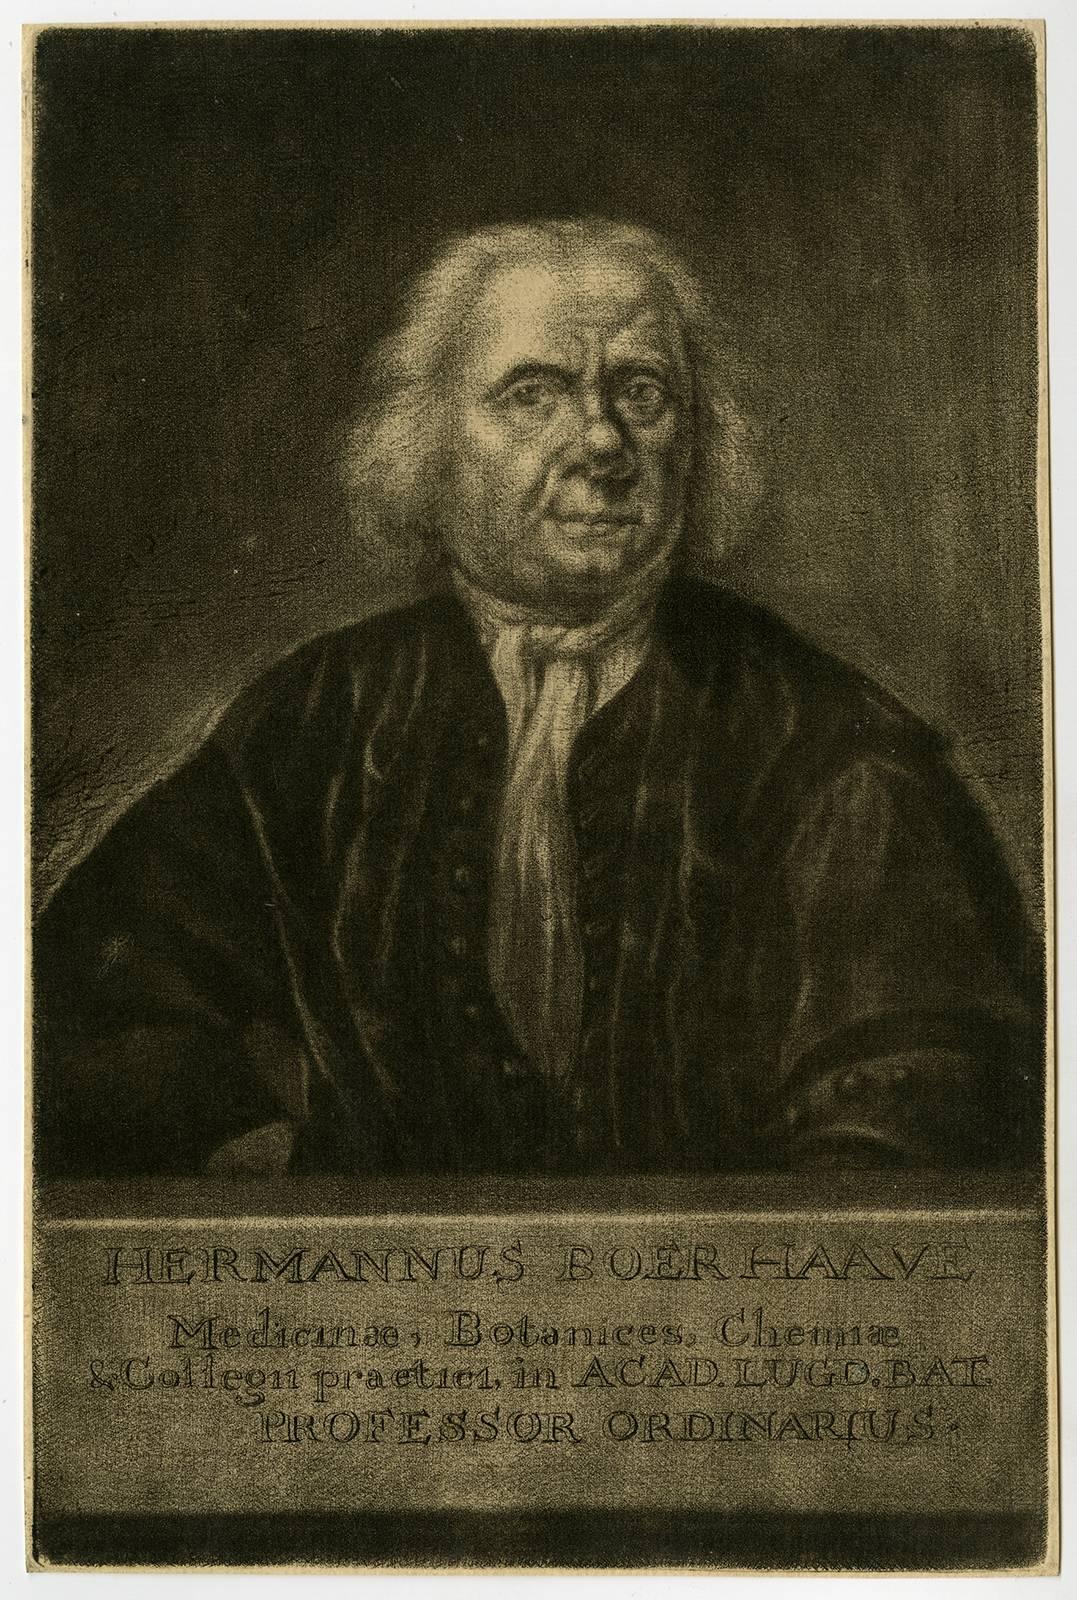 Jan de Groot Portrait Print - Hermannus Boerhaave [..] - Portrait of Hermanus Boerhaave. 